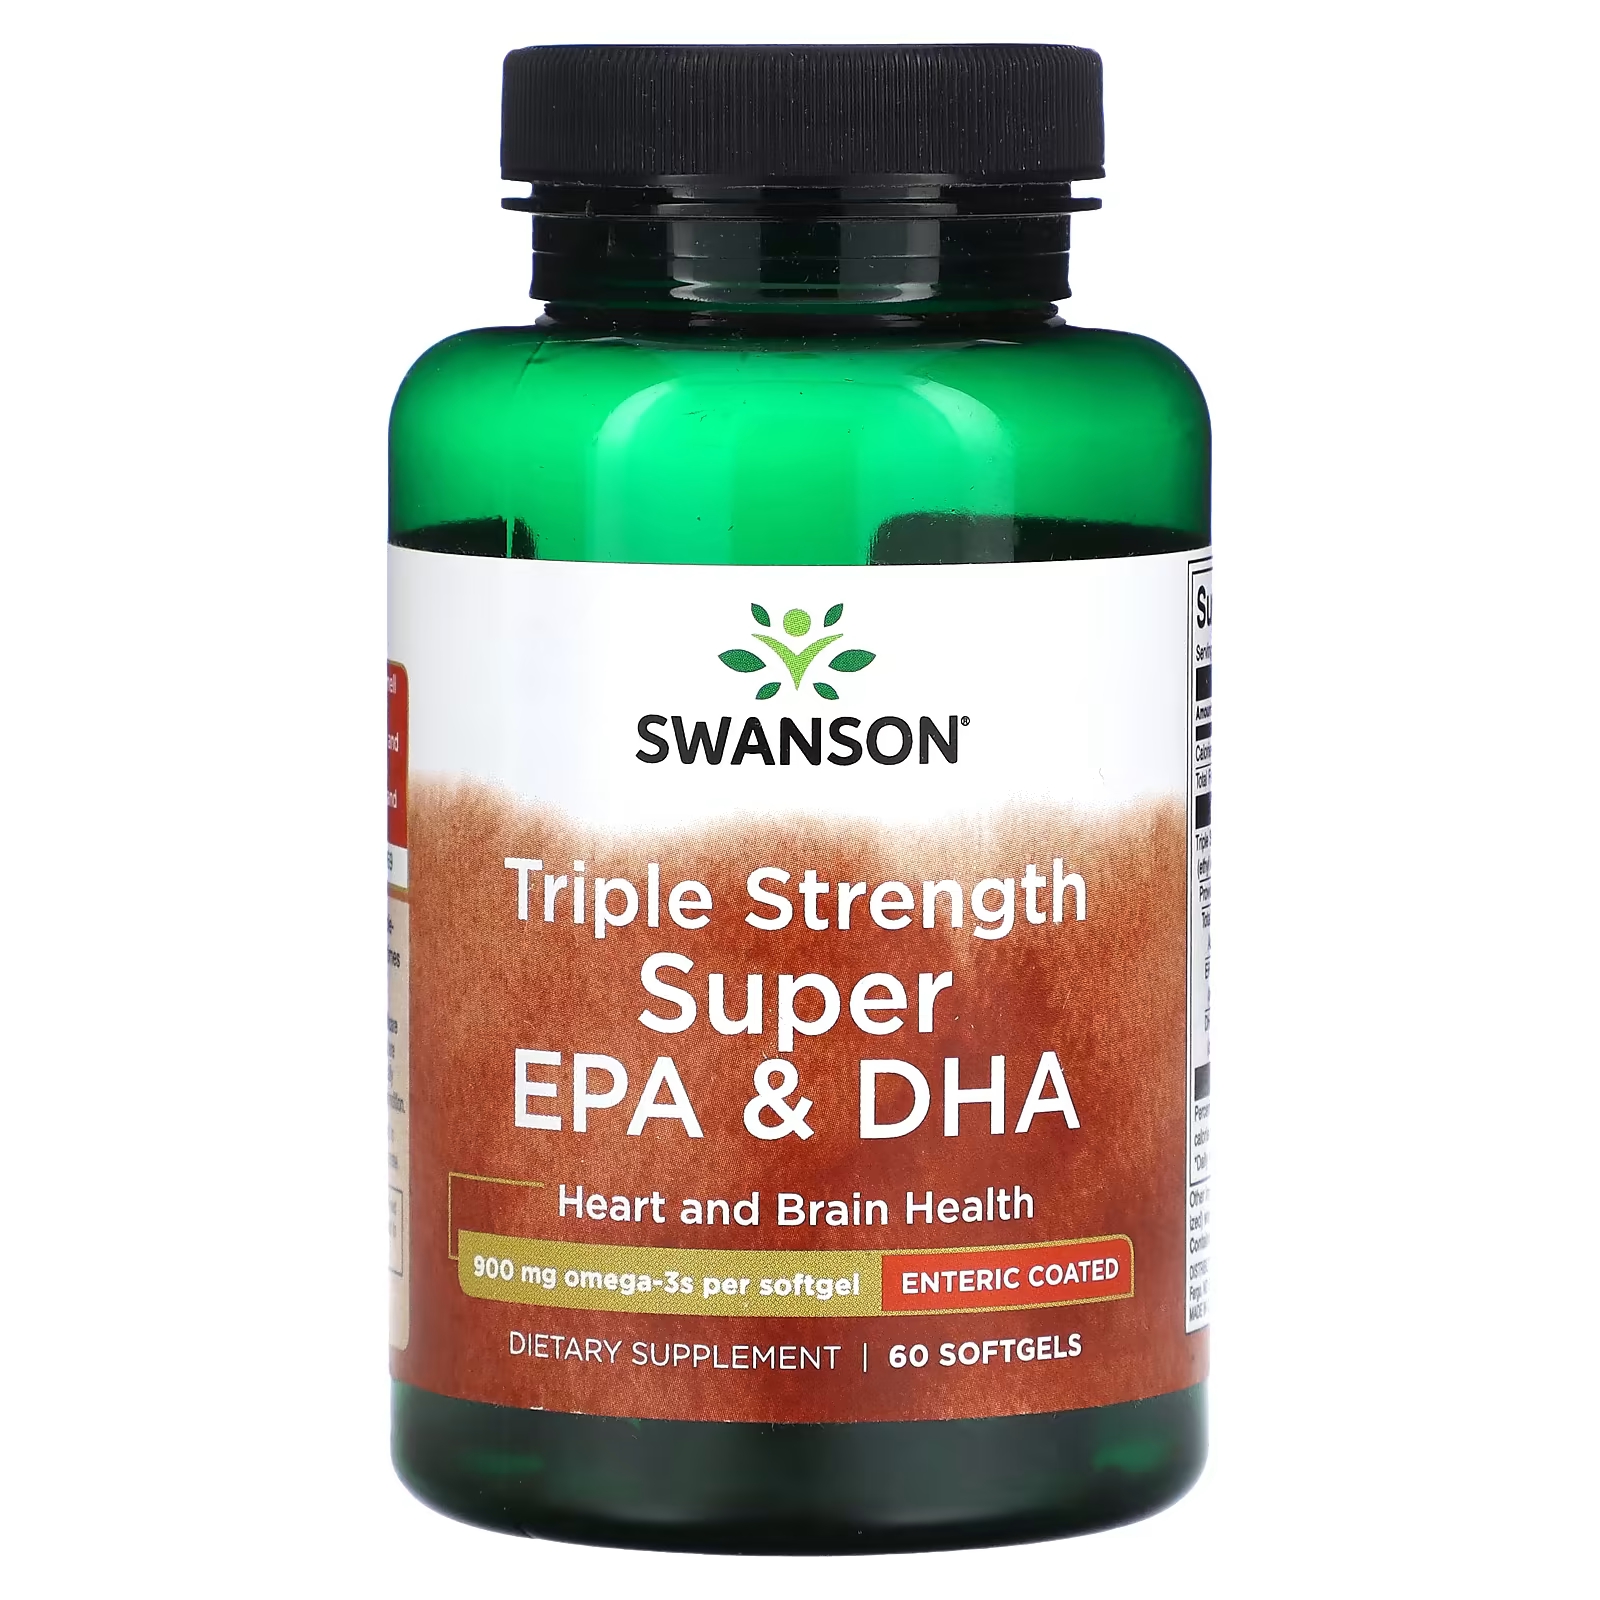 Пищевая добавка Swanson Triple Strength Super EPA и DHA 900 мг, 60 мягких таблеток пищевая добавка swanson triple strength super epa и dha 900 мг 60 мягких таблеток